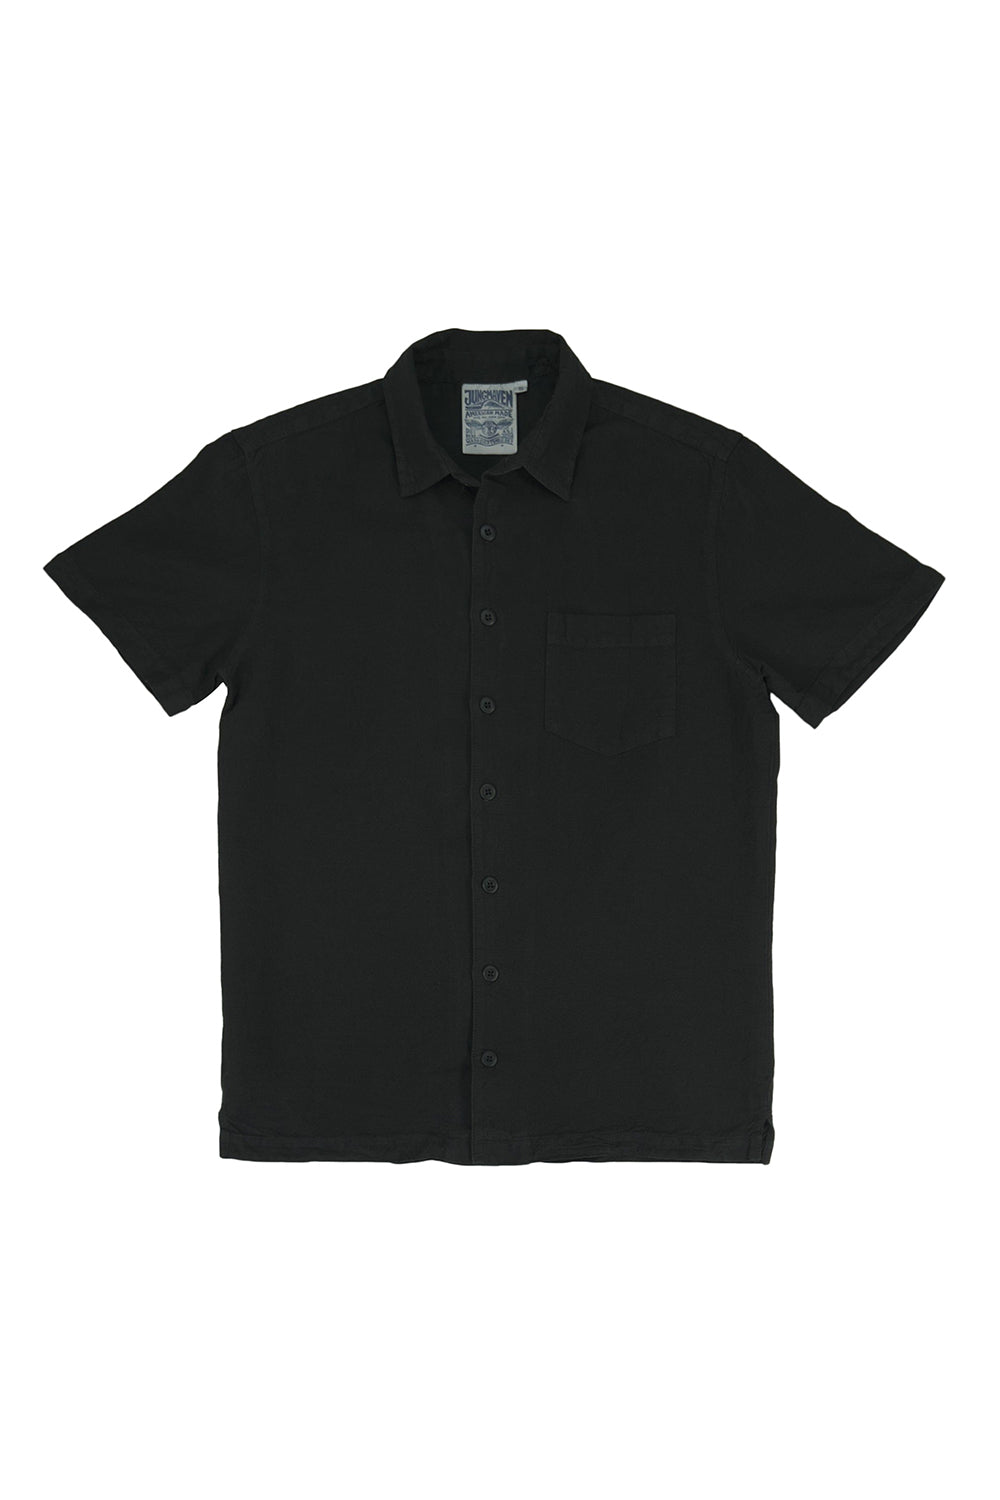 Rincon Shirt | Jungmaven Hemp Clothing & Accessories / Color: Black